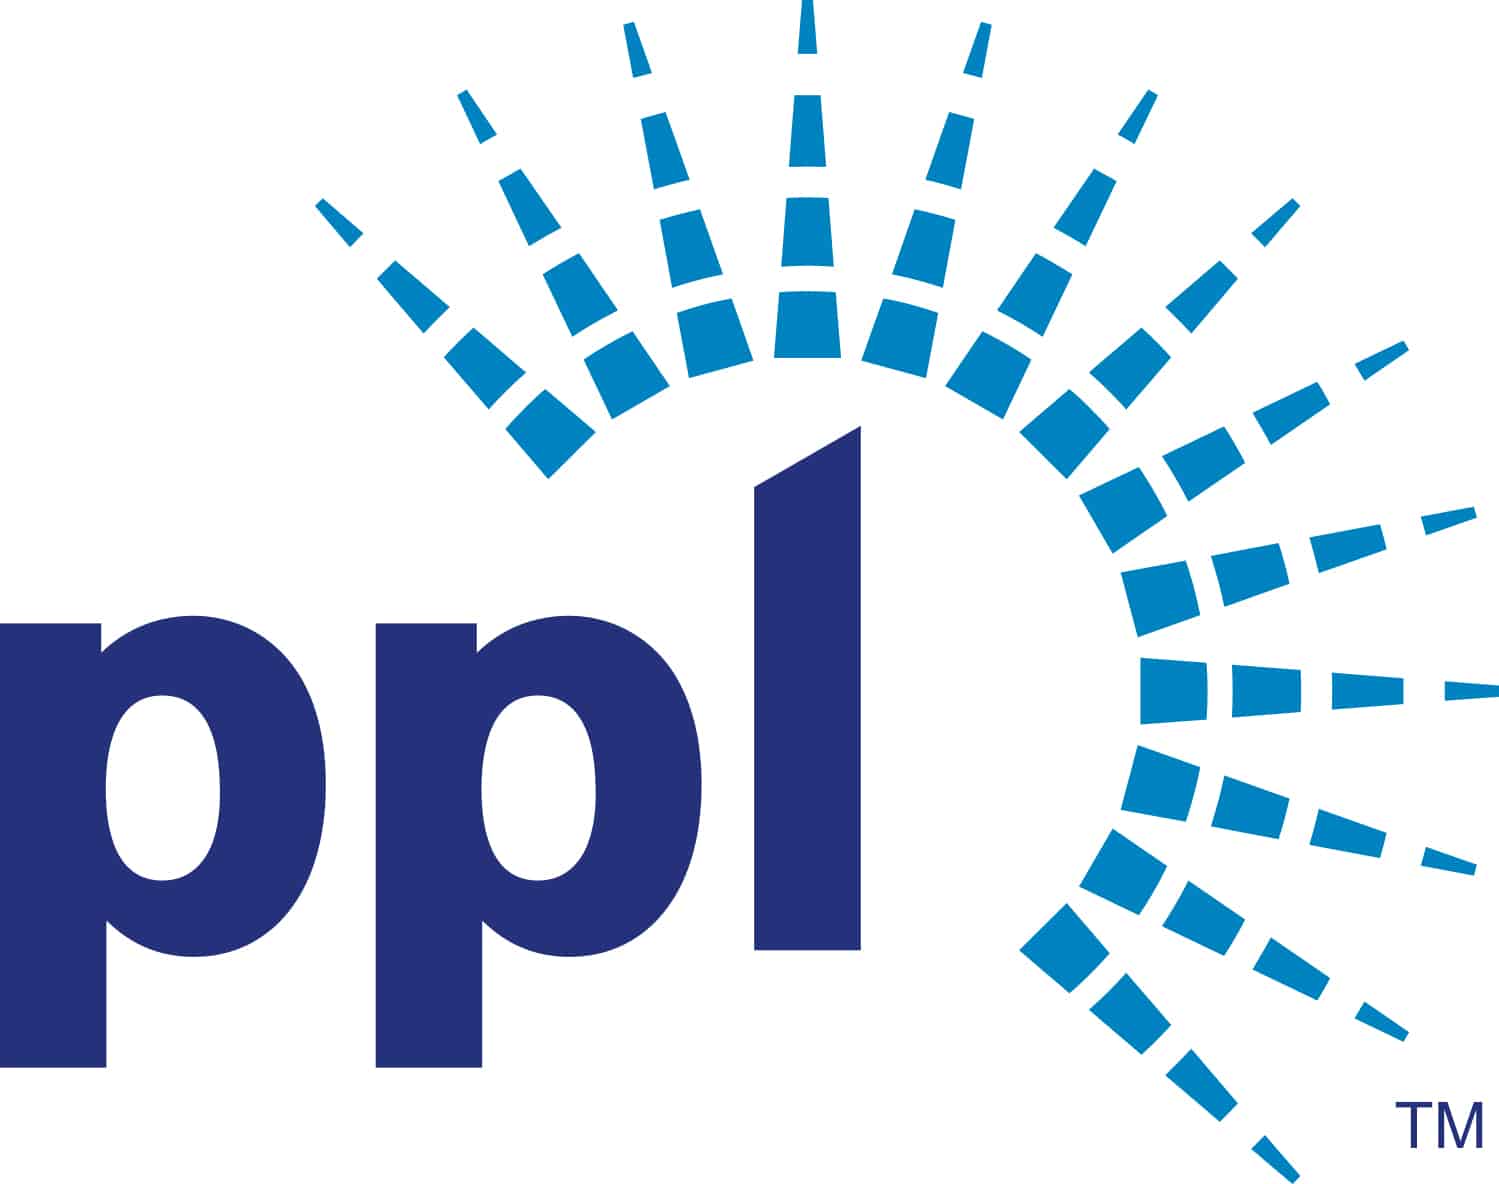 PPL logo with sunburst rays